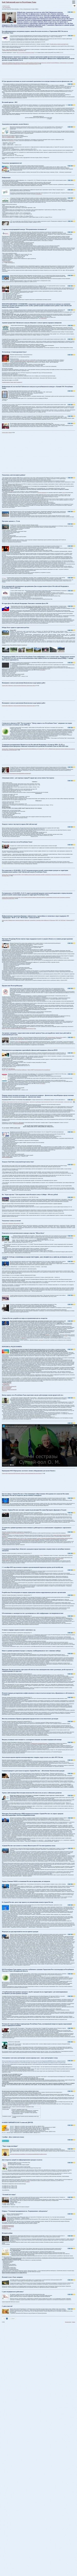 Предпросмотр для www.bai-taigatuva.ru — Администрация Бай-Тайгинского кожууна